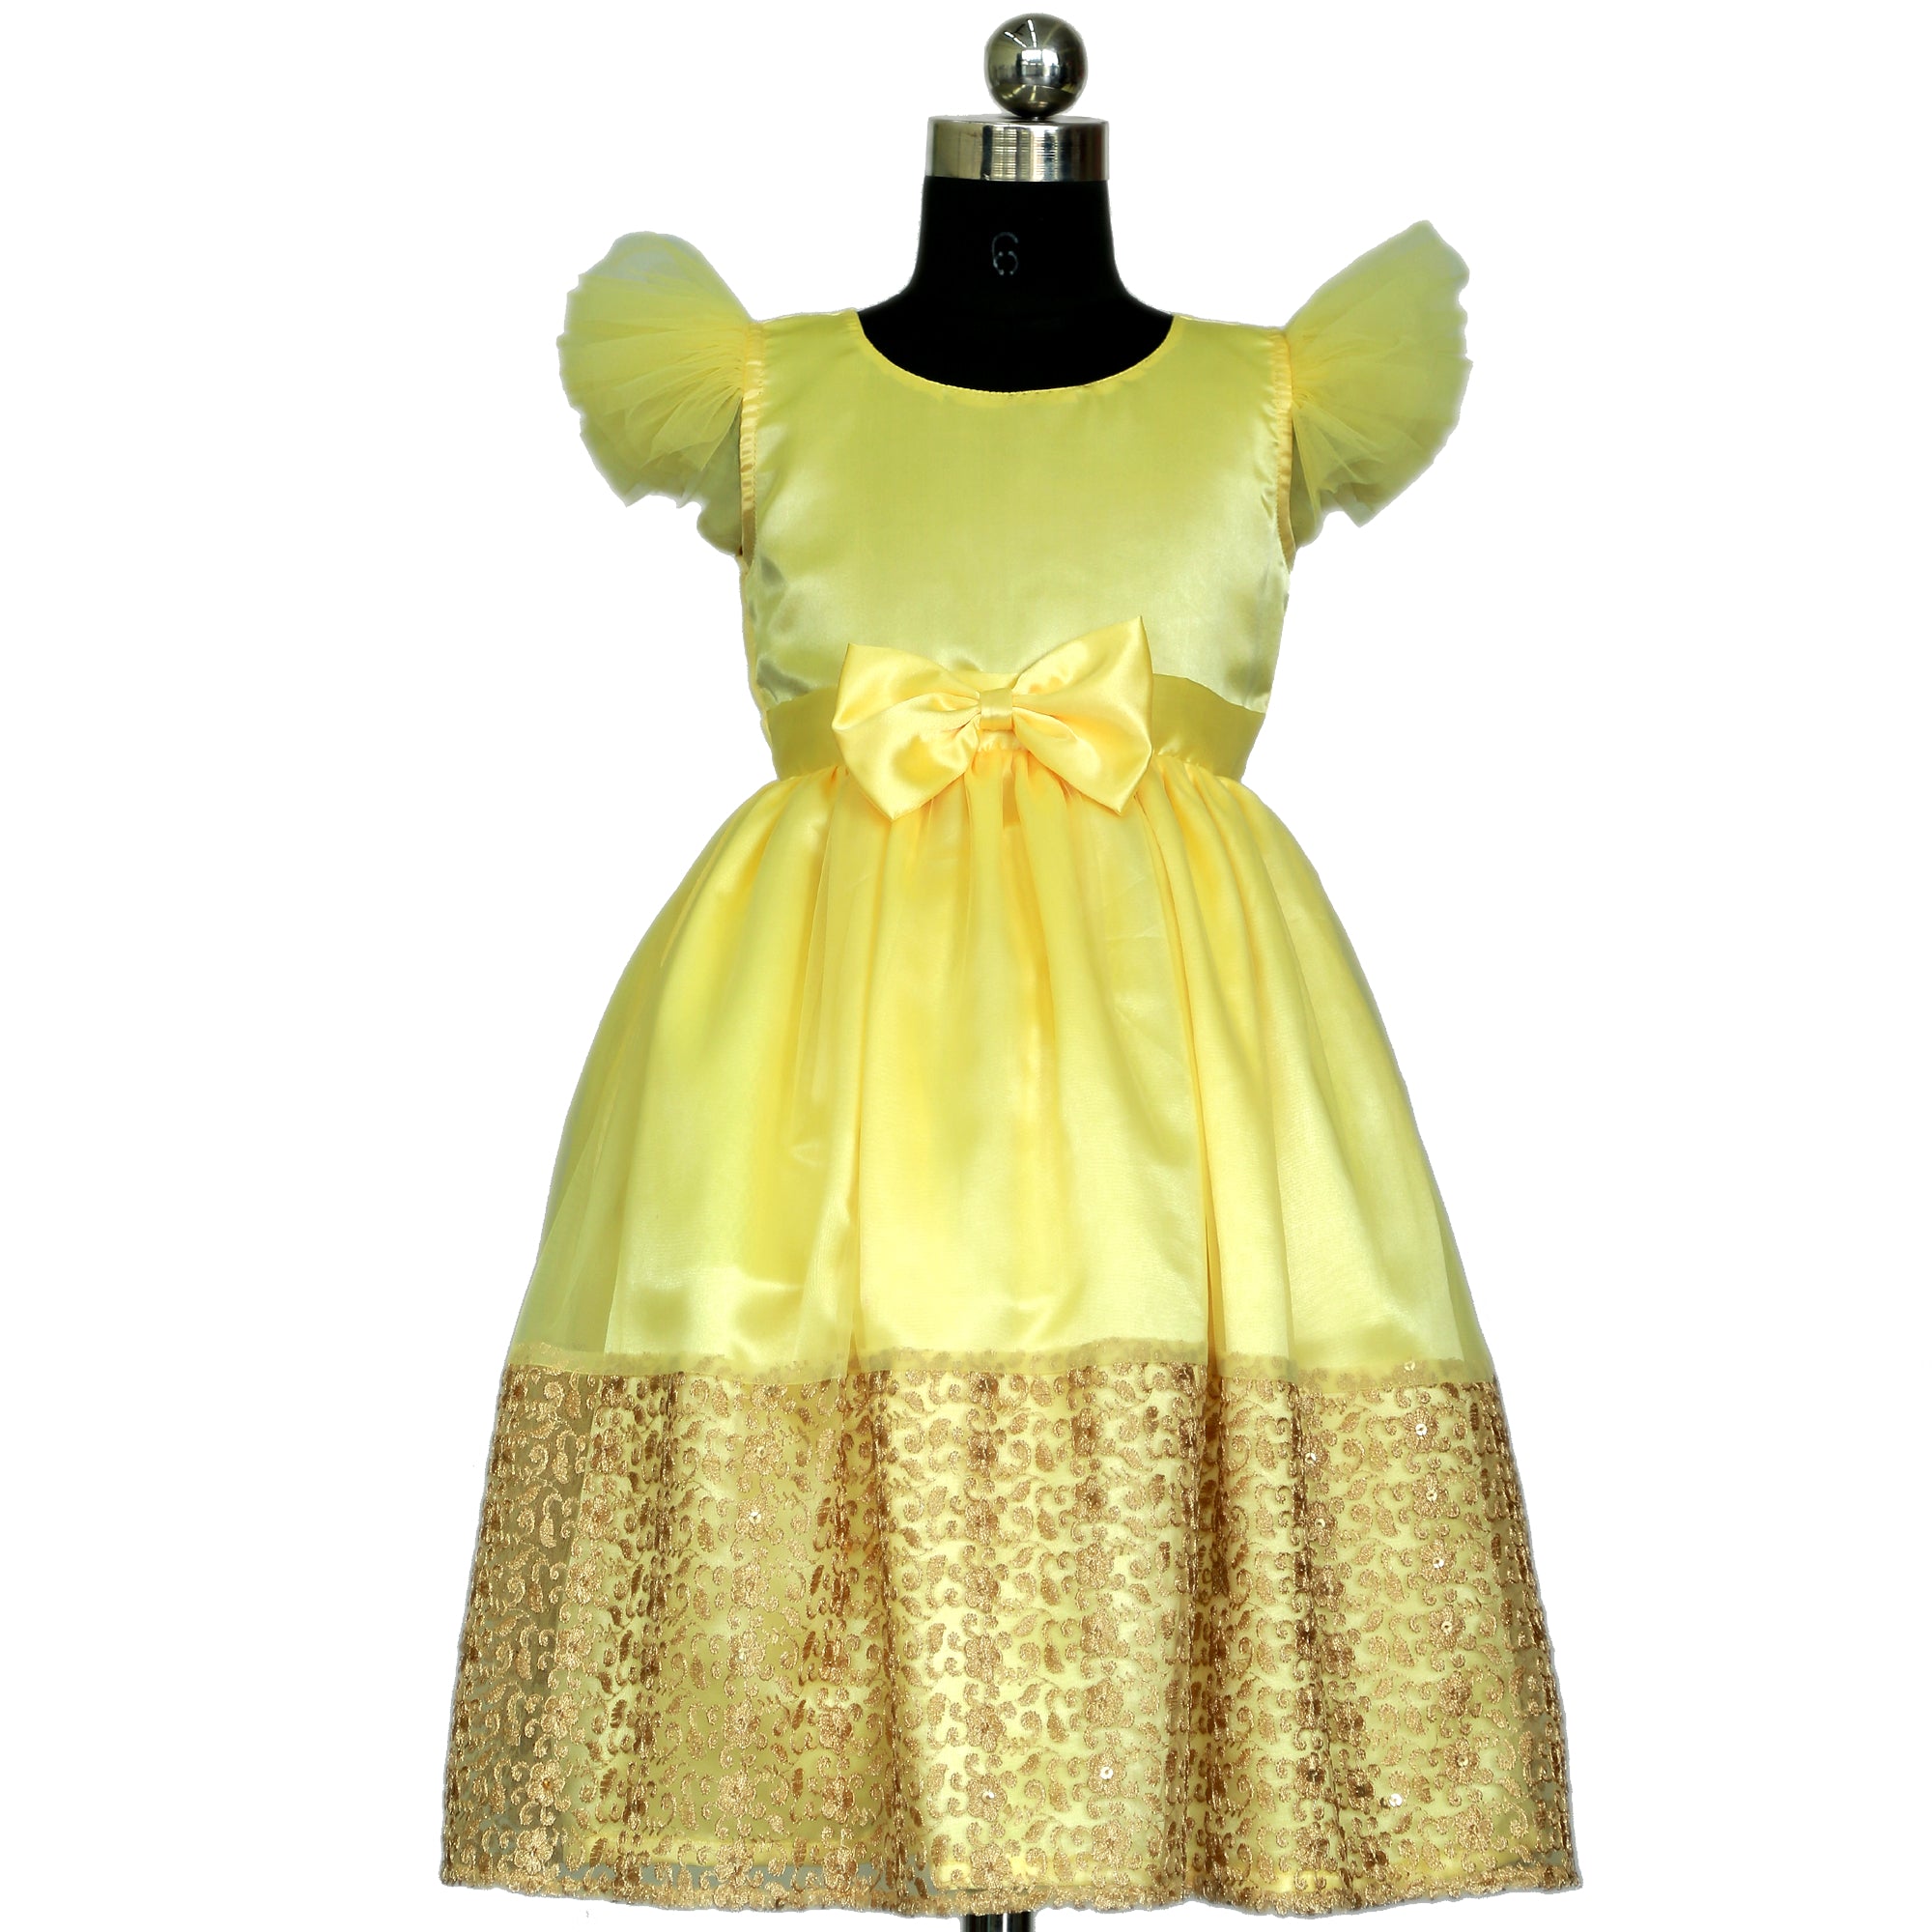 Birthday Gown Dress Designs For Little Girls |Ball Gown Dresses For Kids  |Birthday Dresses - YouTube